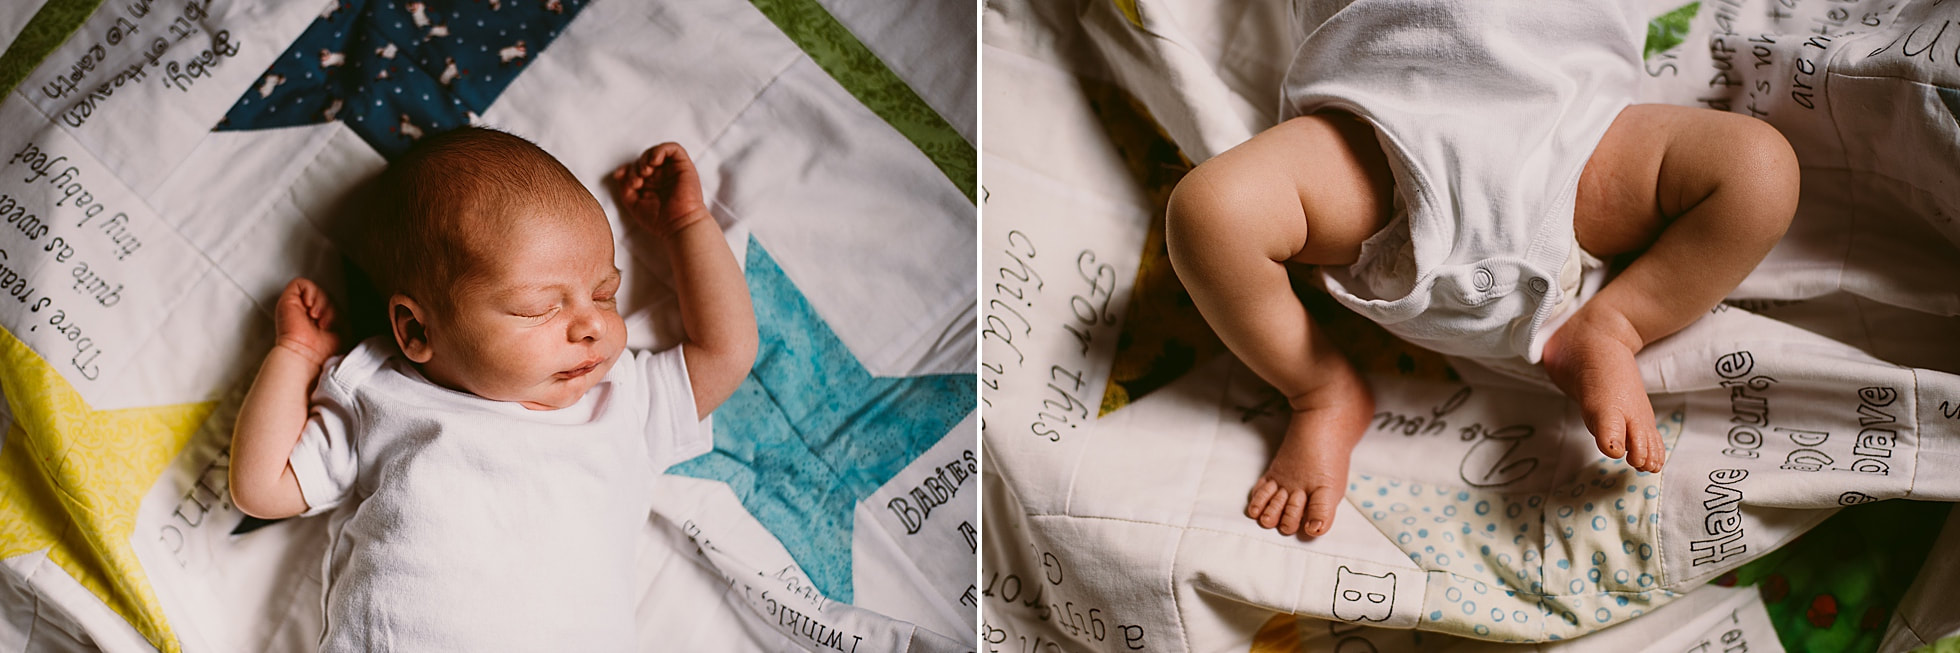 Newborn baby boy on a handmade heirloom quilt